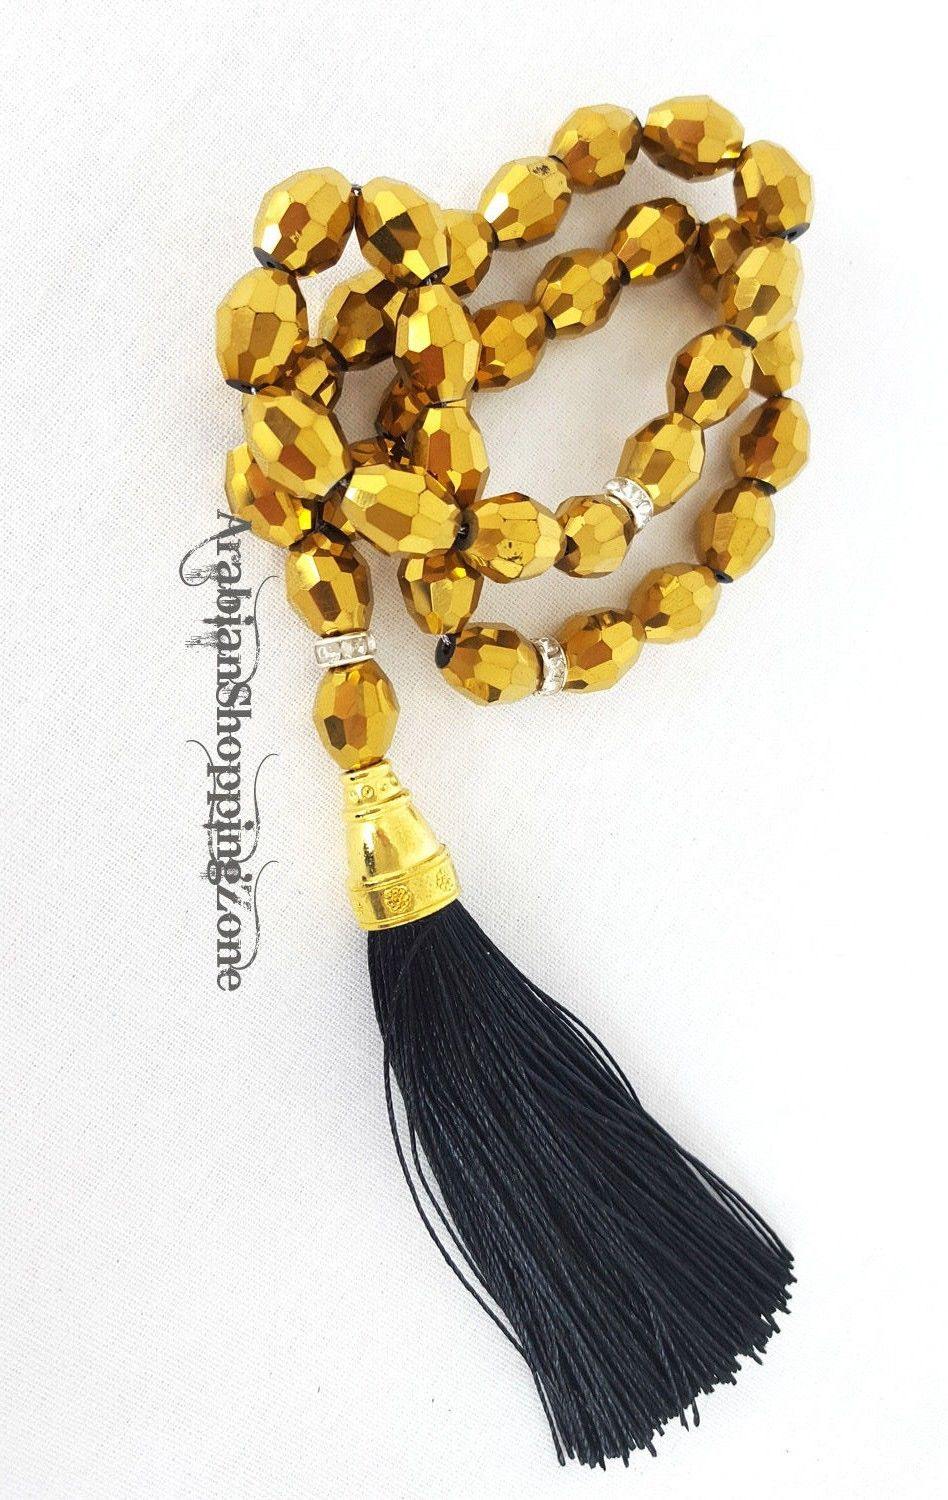 Islamic Salah 12mm Golden Crystal Prayer Beads 33 Mesbaha - Arabian Shopping Zone